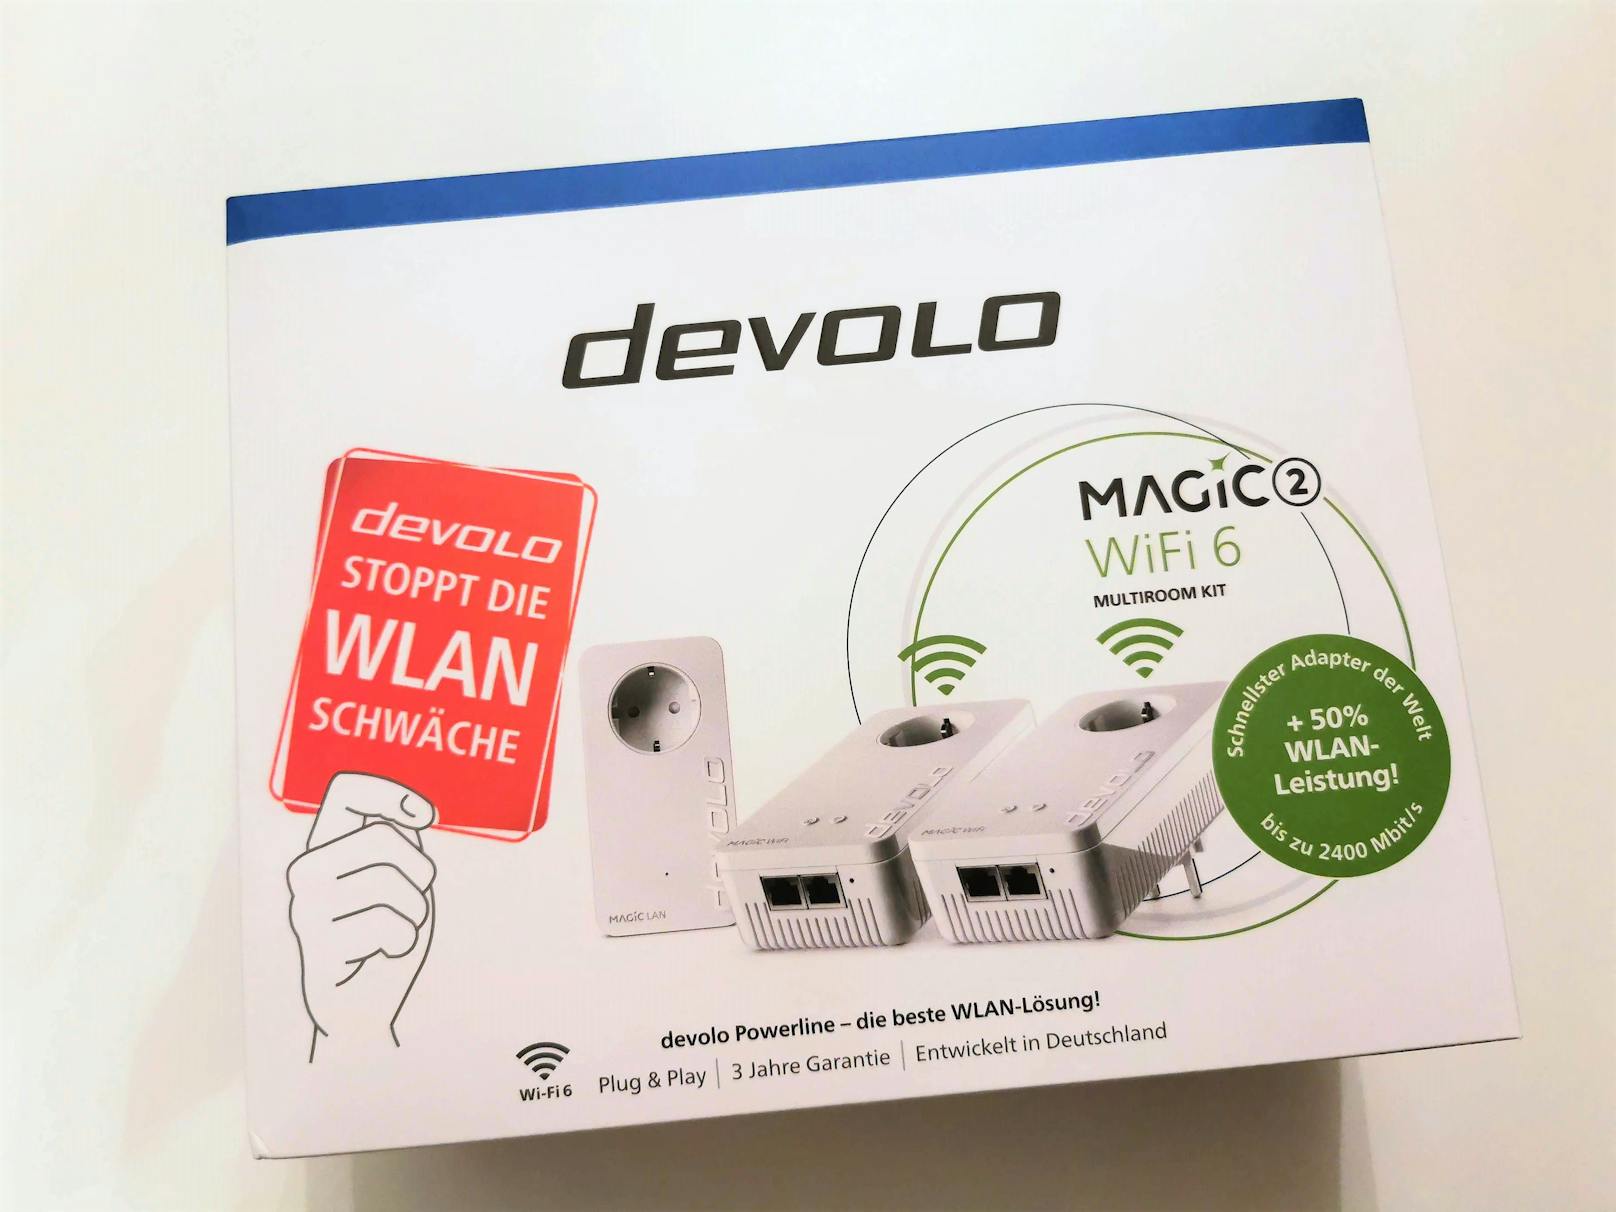 devolo Magic 2 WiFi 6 Multiroom Kit im Test